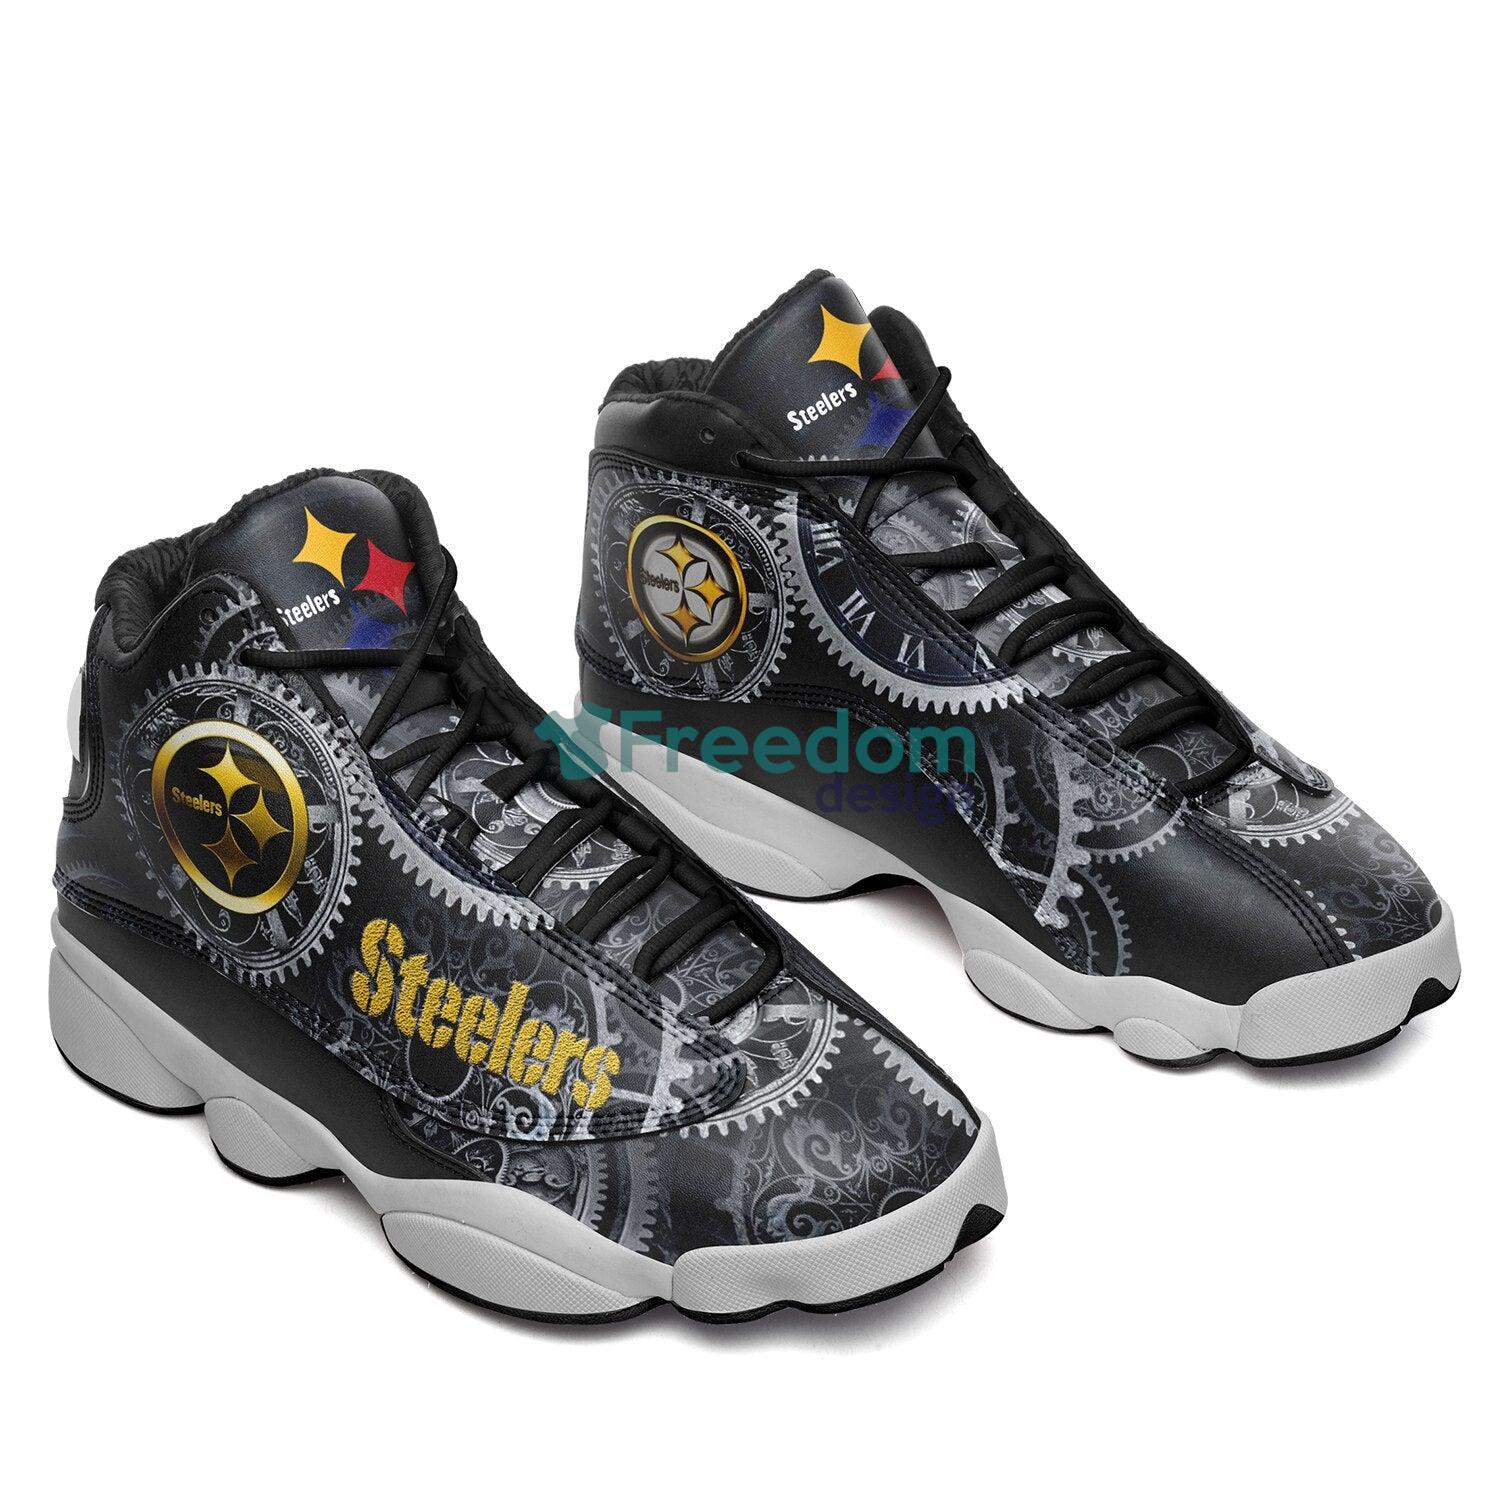 Pittsburgh Steelers Fans Yellow Air Jordan 13 Sneaker Shoes